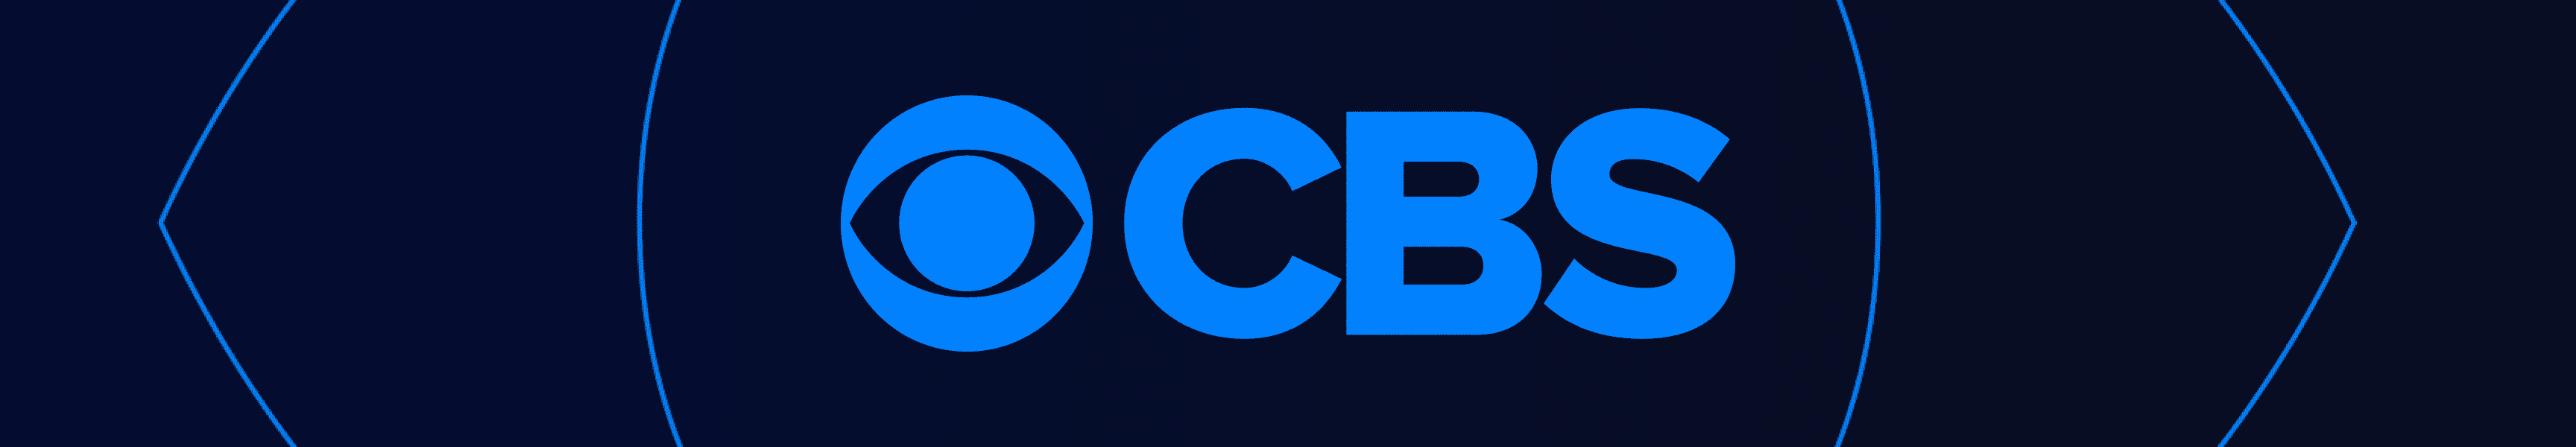 CBS Entertainment Fournitures de cuisine